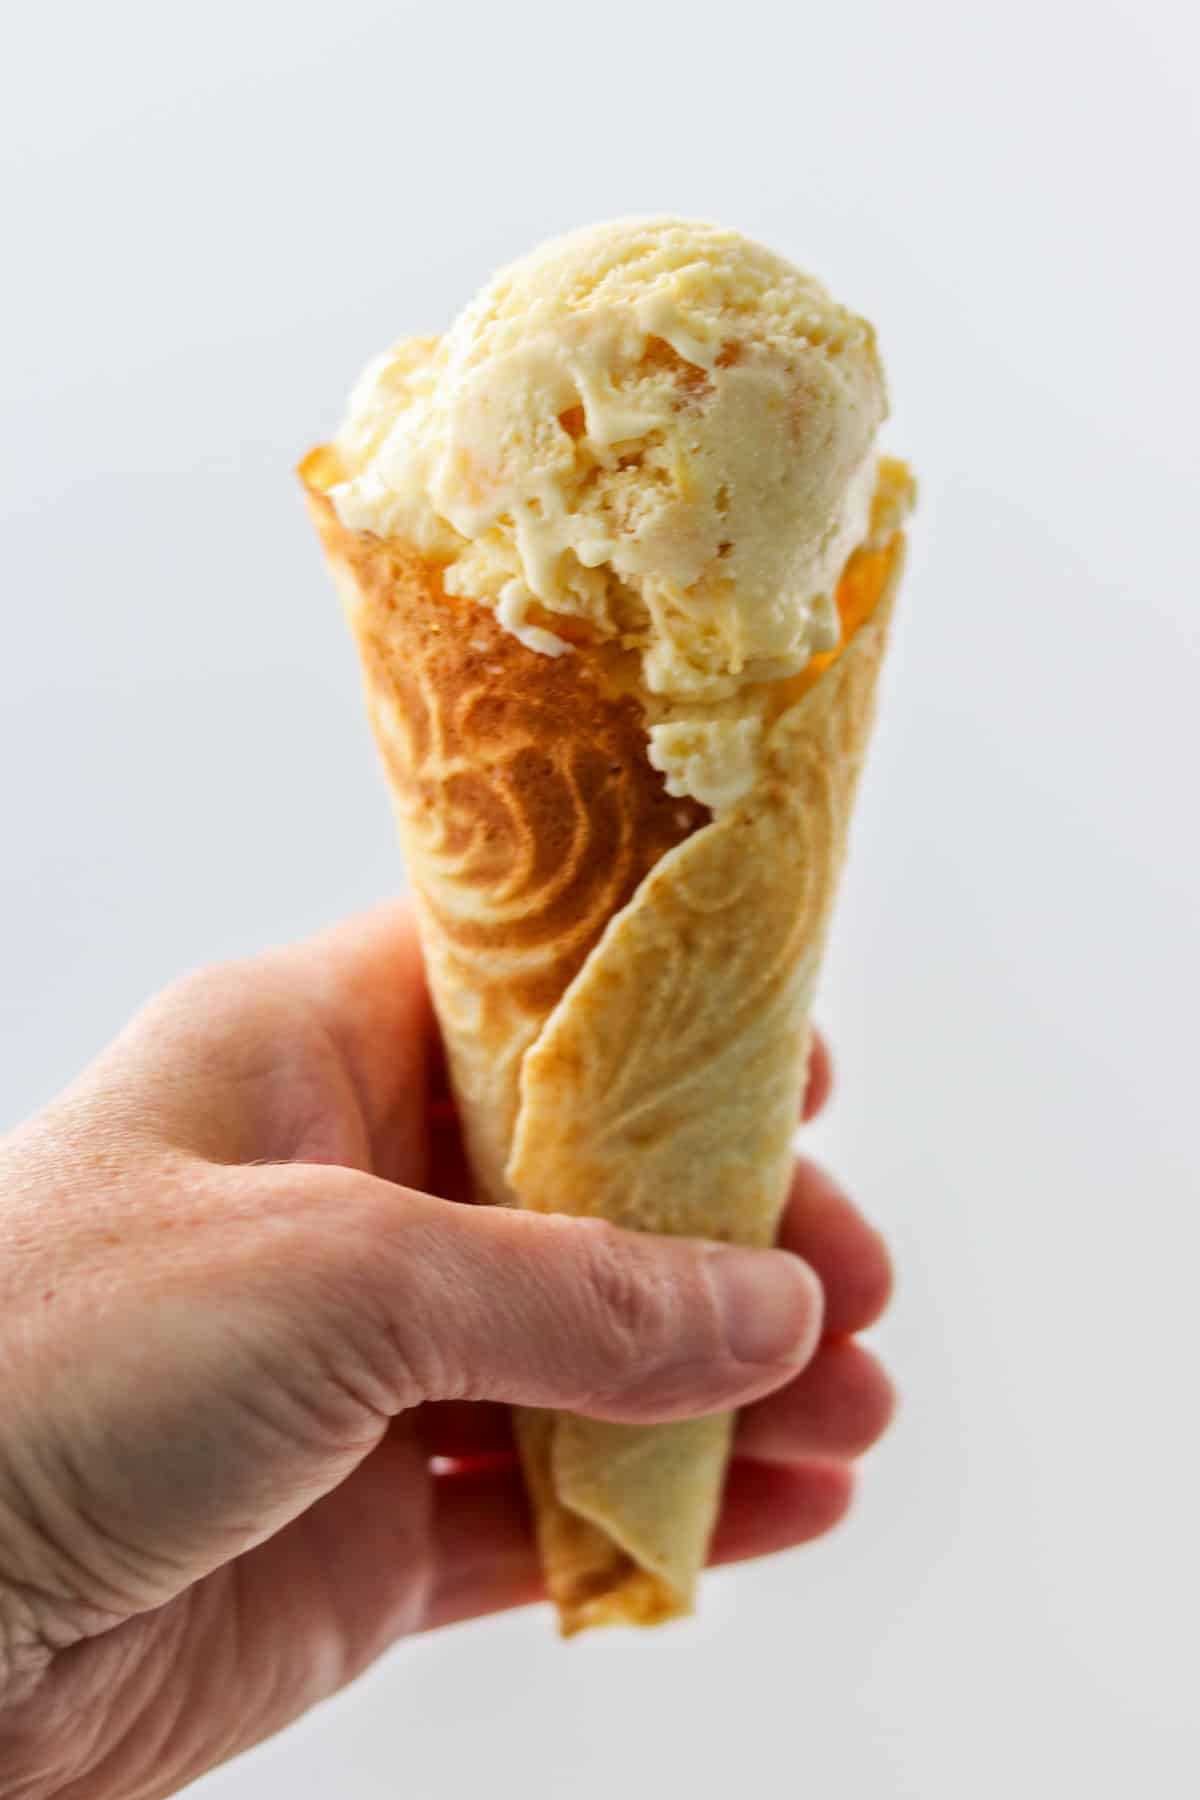 Person holding ice cream cone filled with peach ice cream.